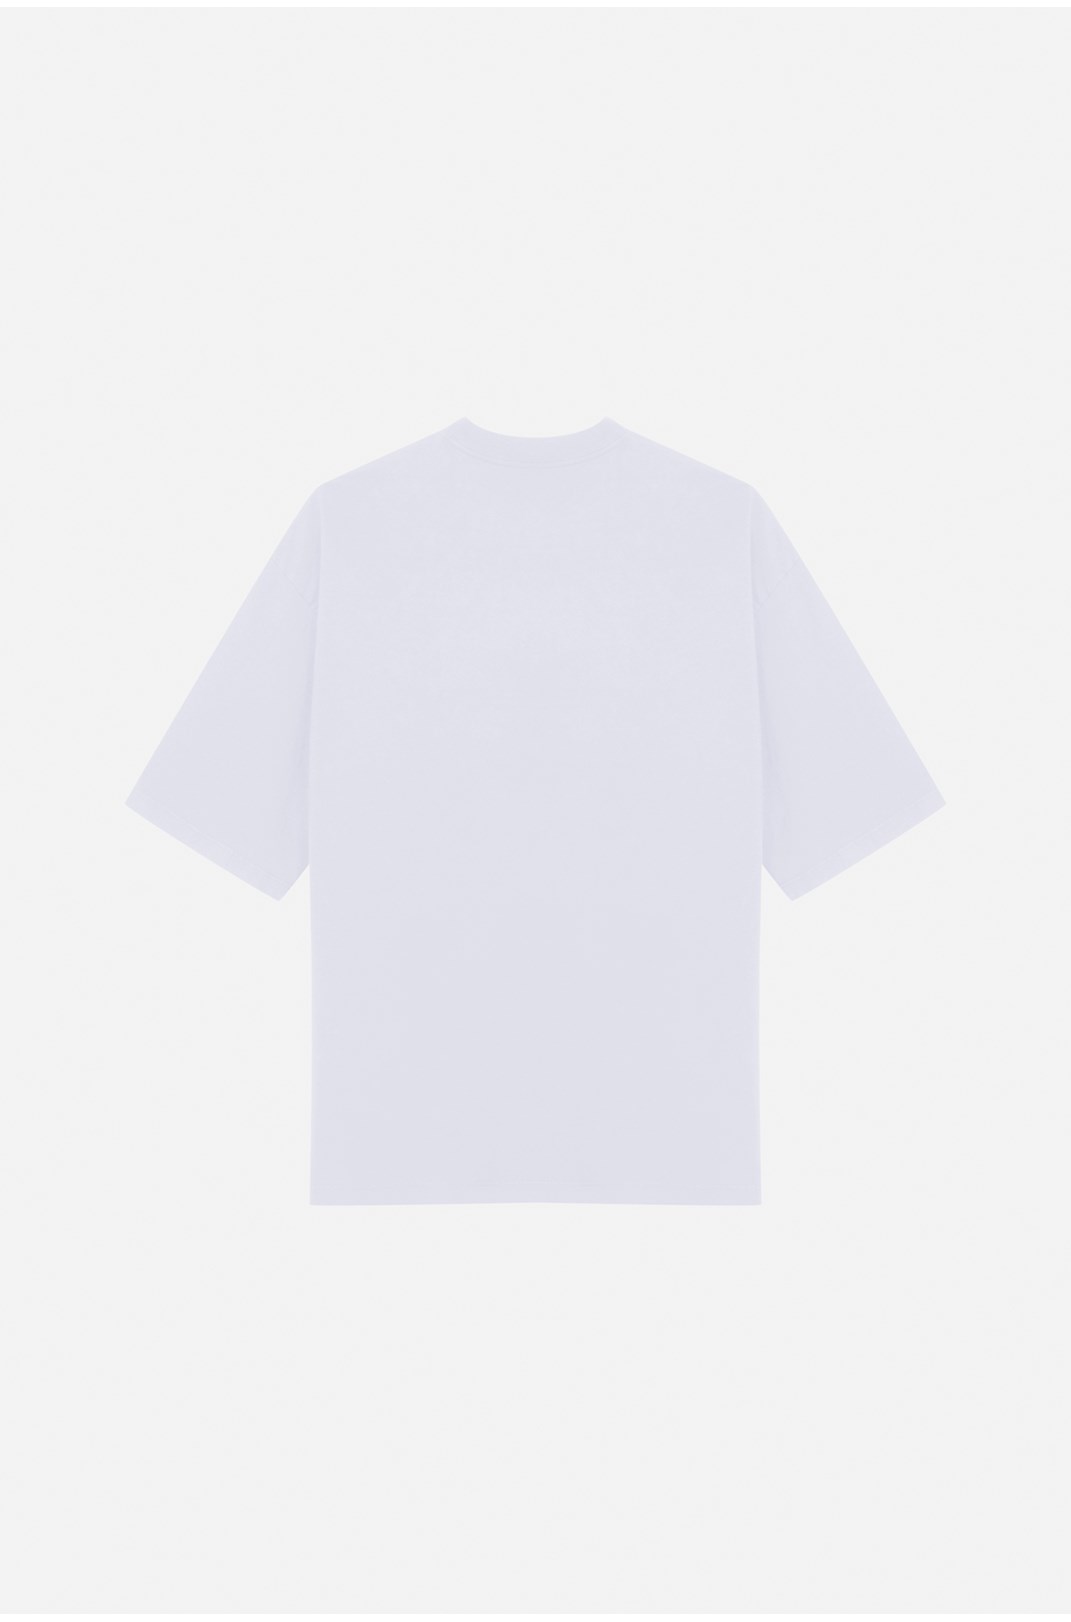 Camiseta No-Sew Approve Big Logo Branca